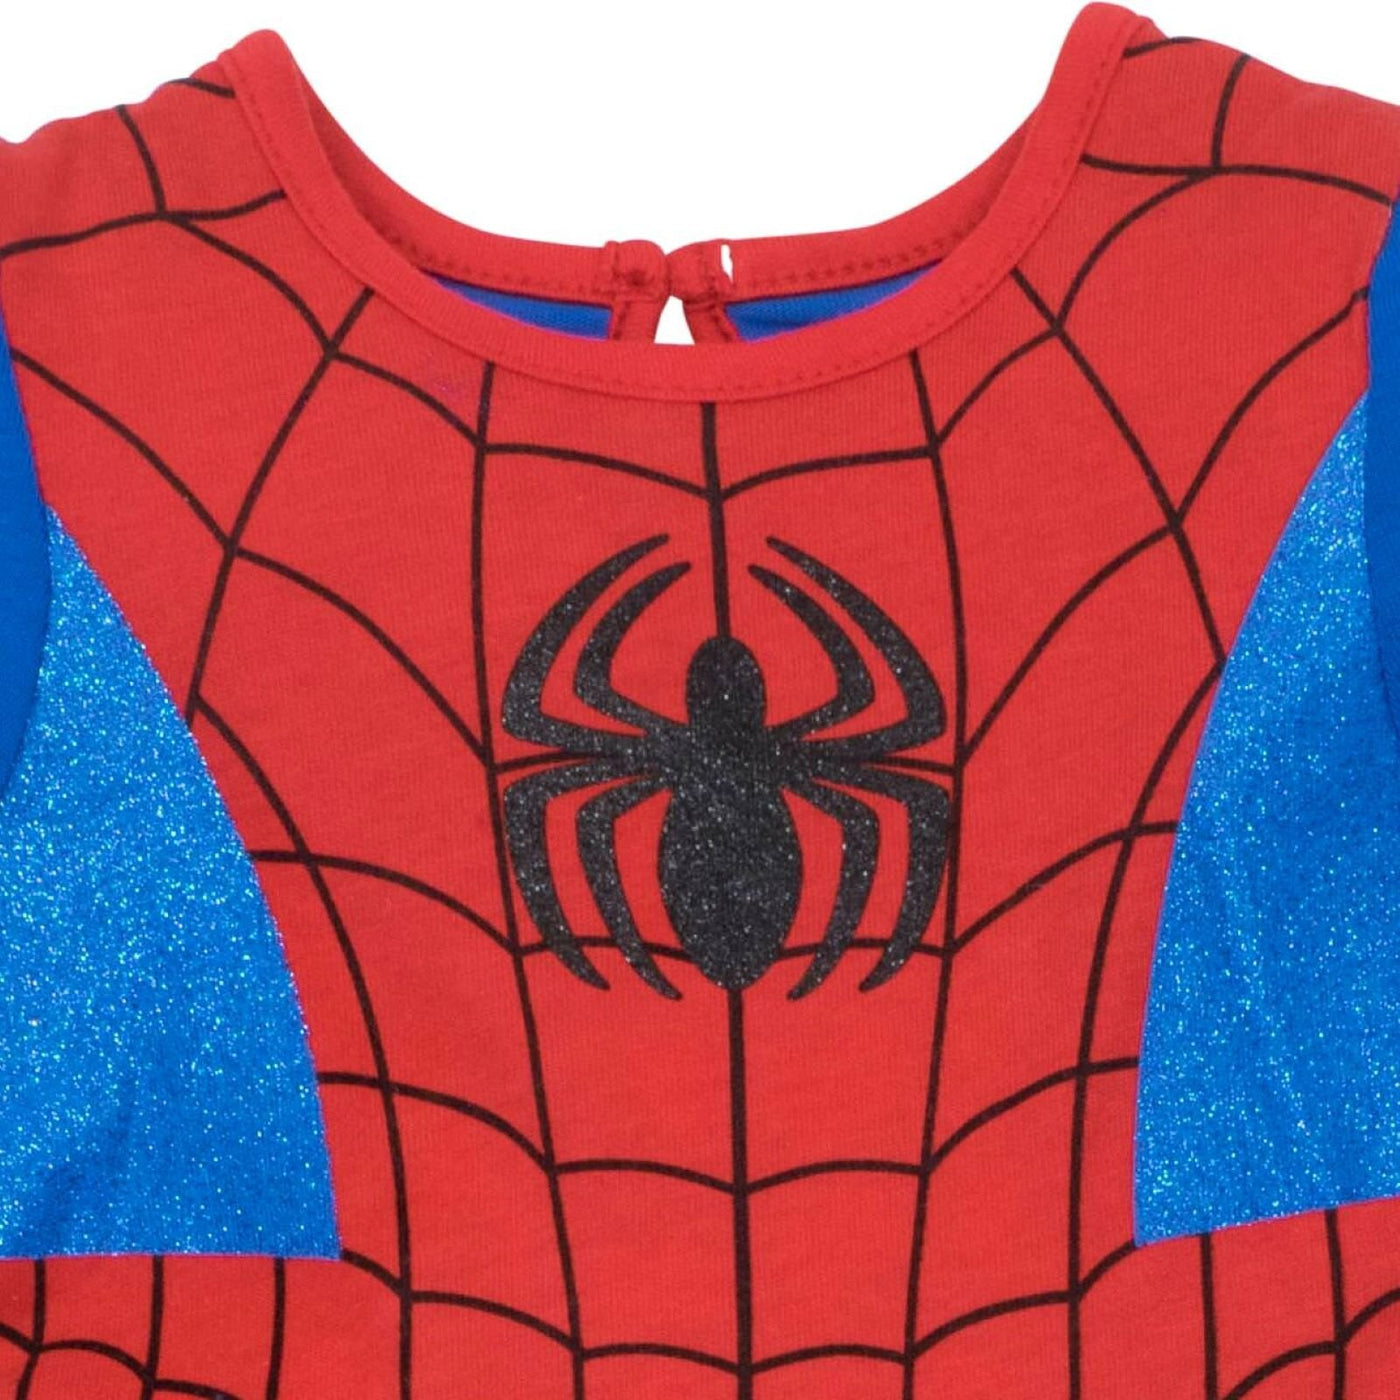 Marvel Avengers Spider-Man Dress Leggings and Headband 3 Piece